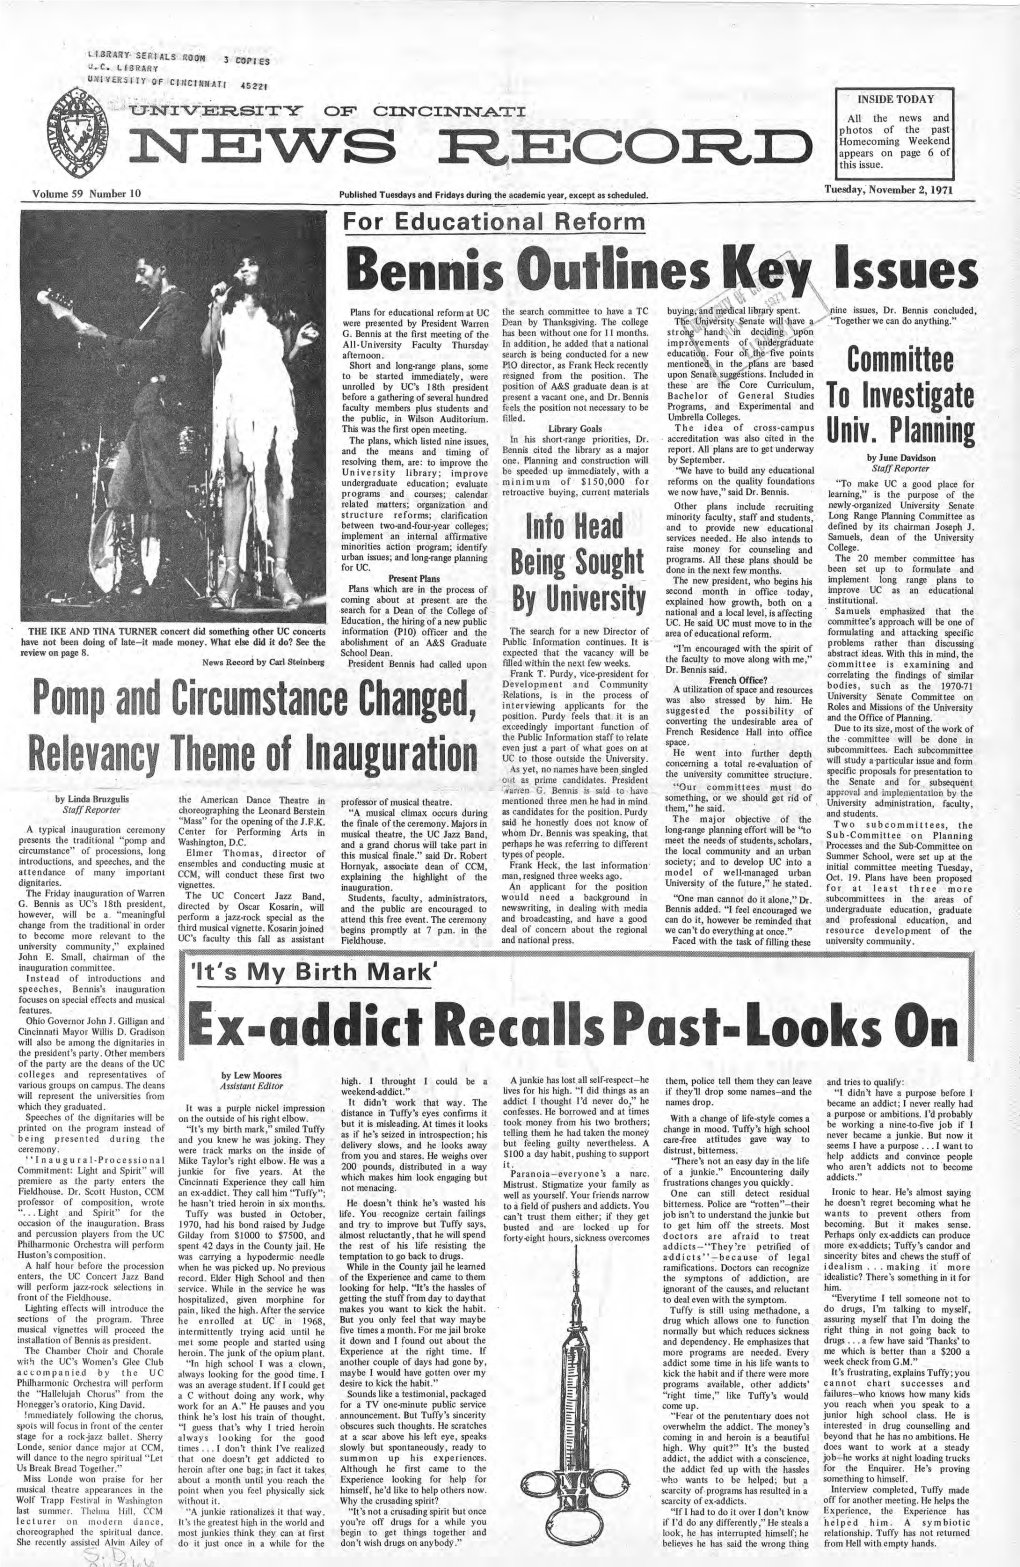 University of Cincinnati News Record. Tuesday, November 2, 1971. Vol